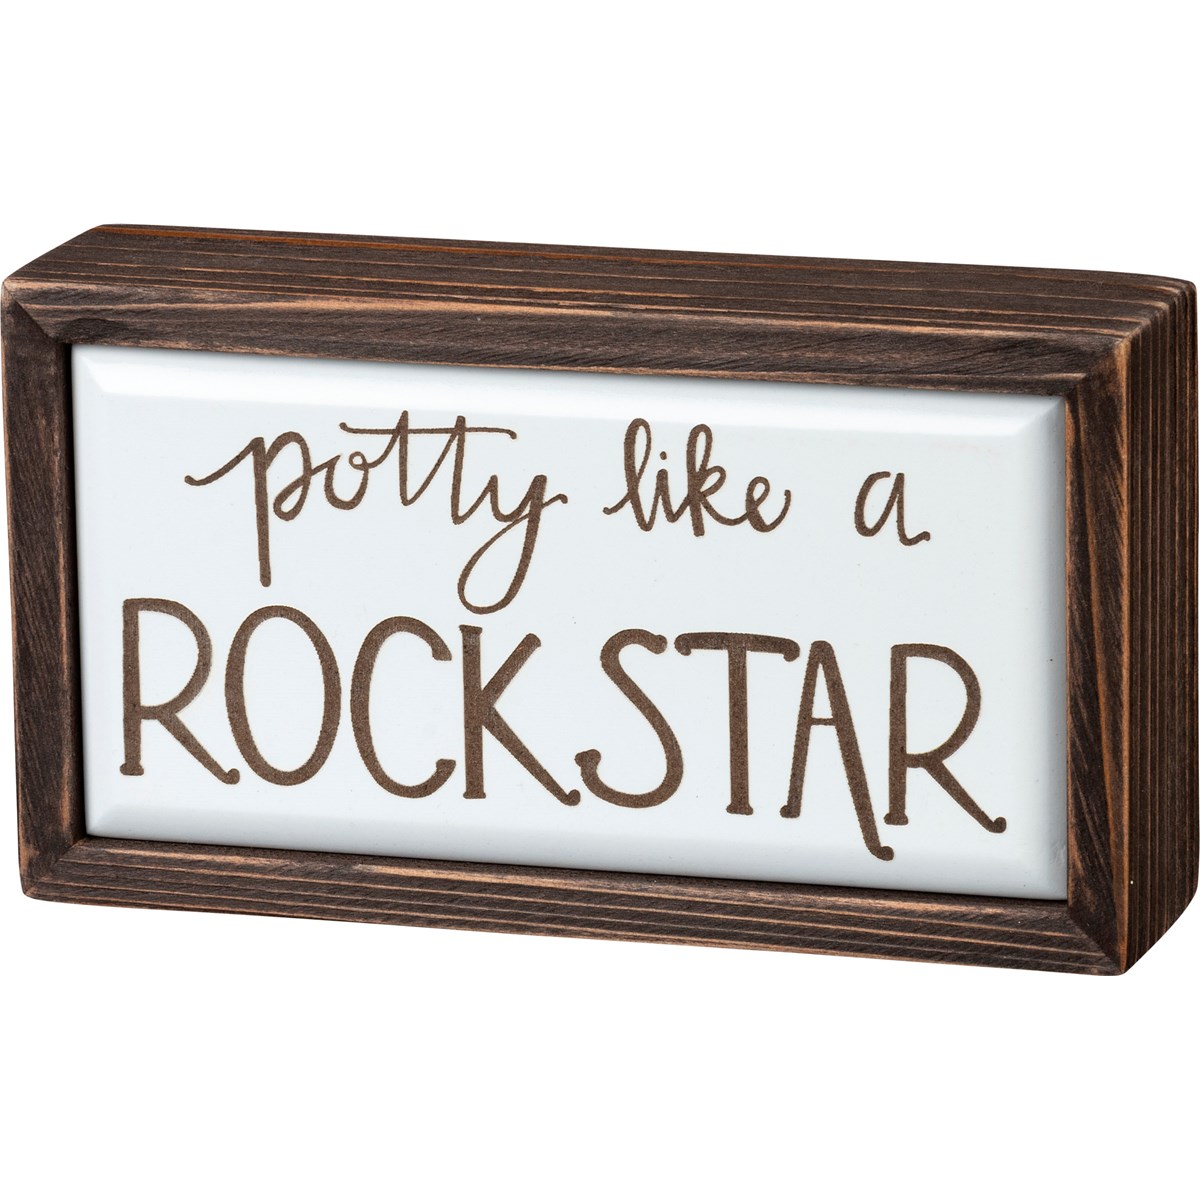 Potty Like A Rock Star Box Sign - Wood